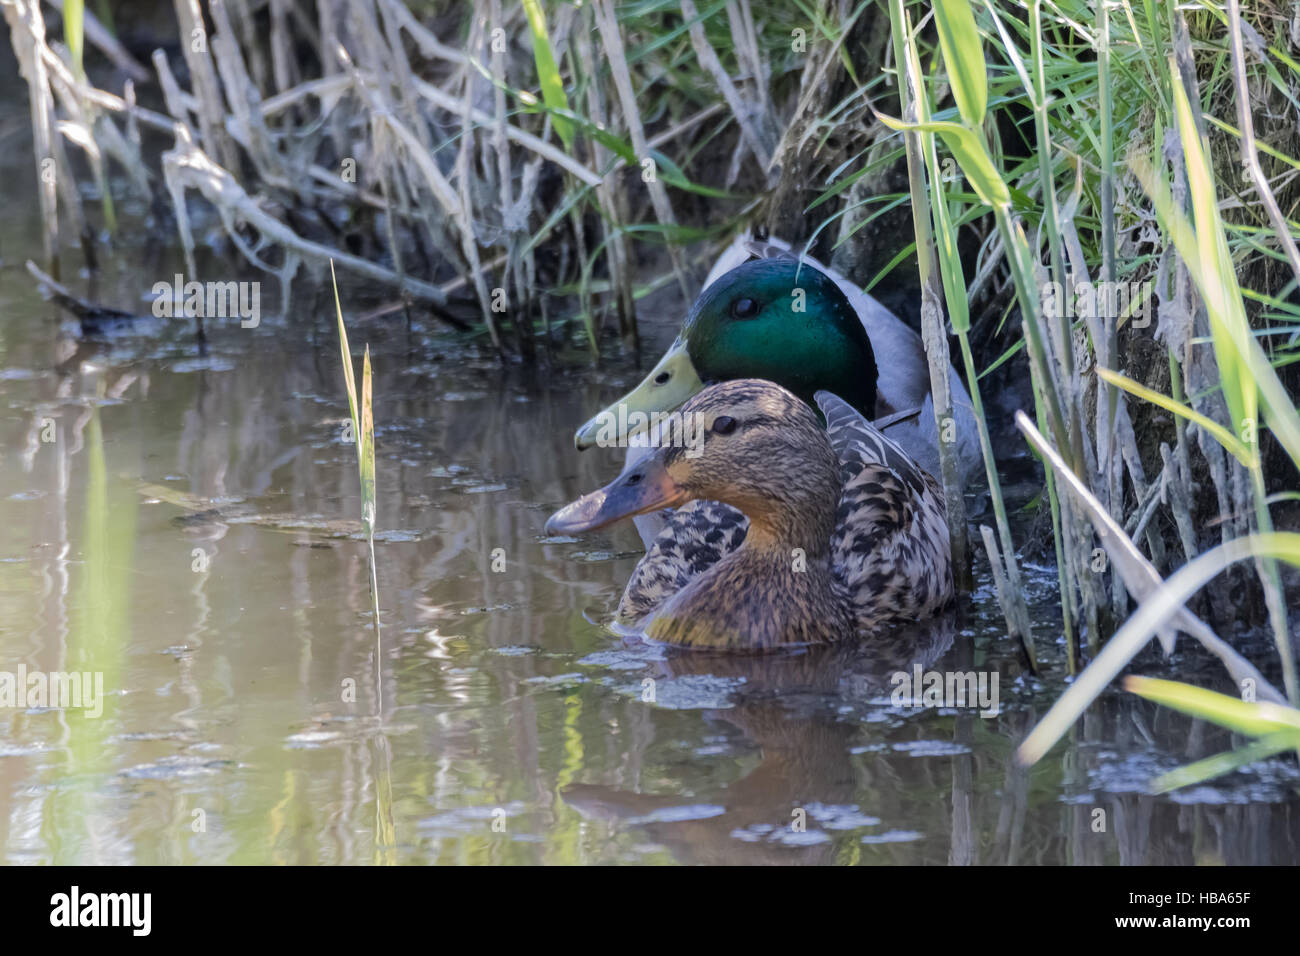 Pair of ducks in water Stock Photo